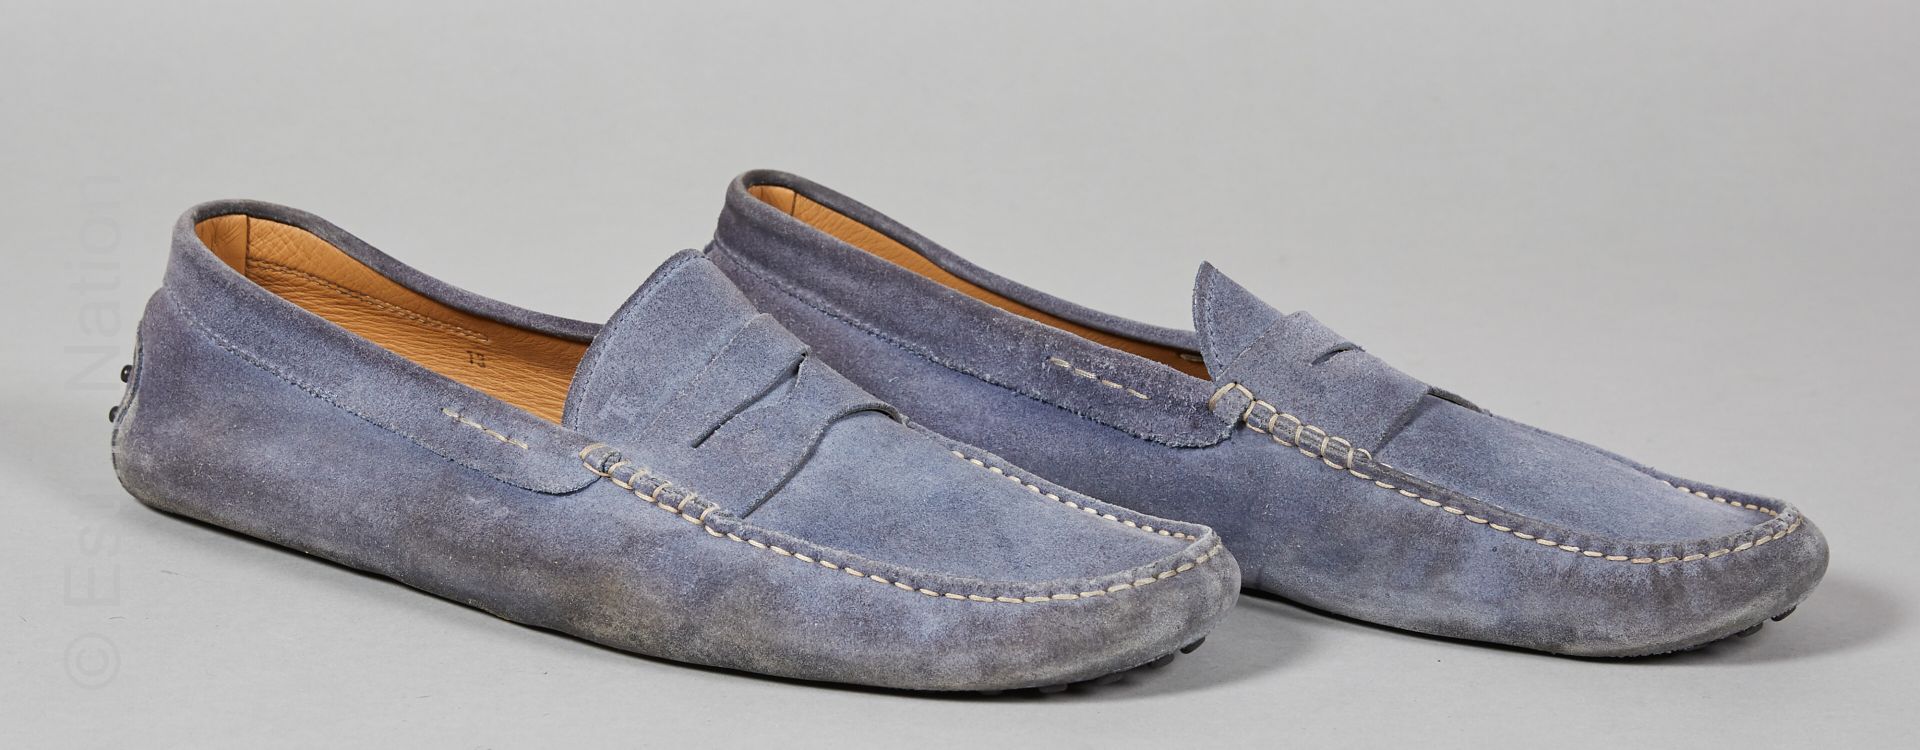 Tod's 一双蓝色麂皮船型拖鞋（13元或约47元）（污垢和铜锈）。